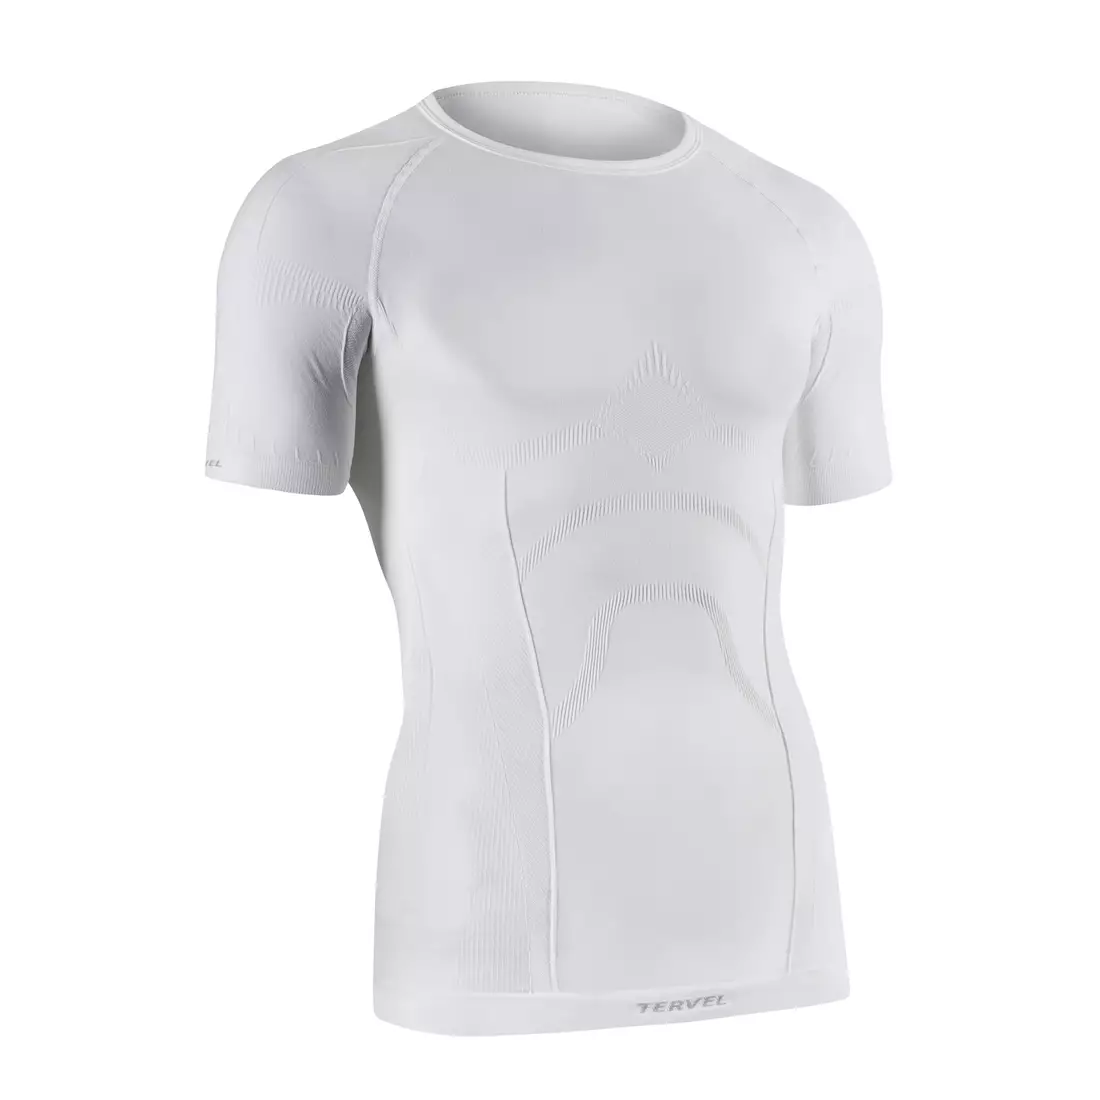 TERVEL COMFORTLINE 1102 - Herren-Thermo-T-Shirt, Kurzarm, Farbe: Weiß